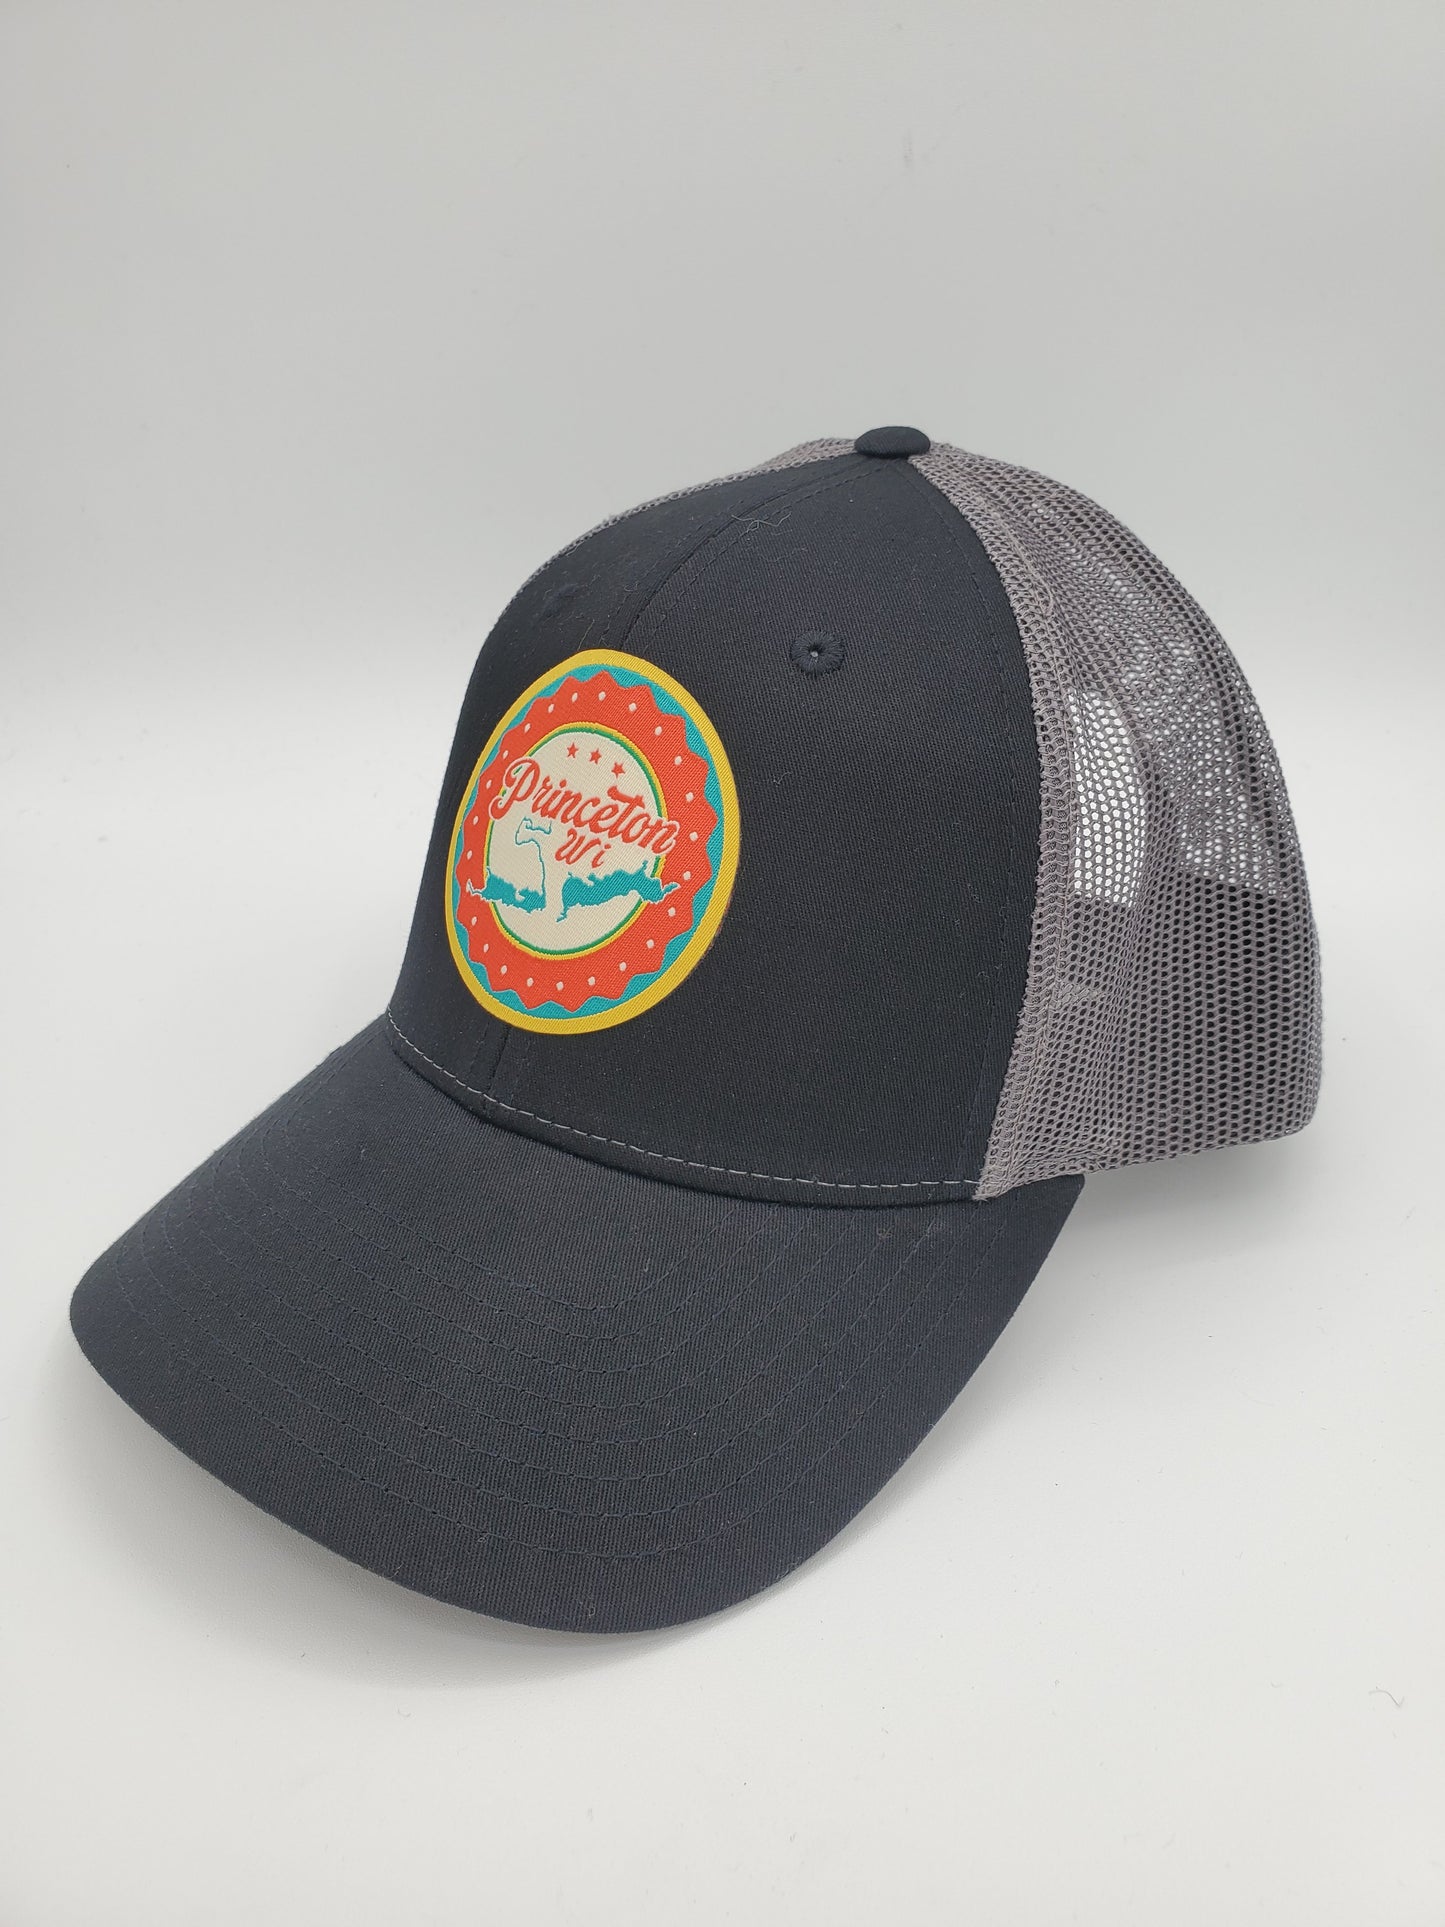 "Princeton, WI" Lake Design Trucker Hat (Black Mesh/ Charcoal Grey Fabric)